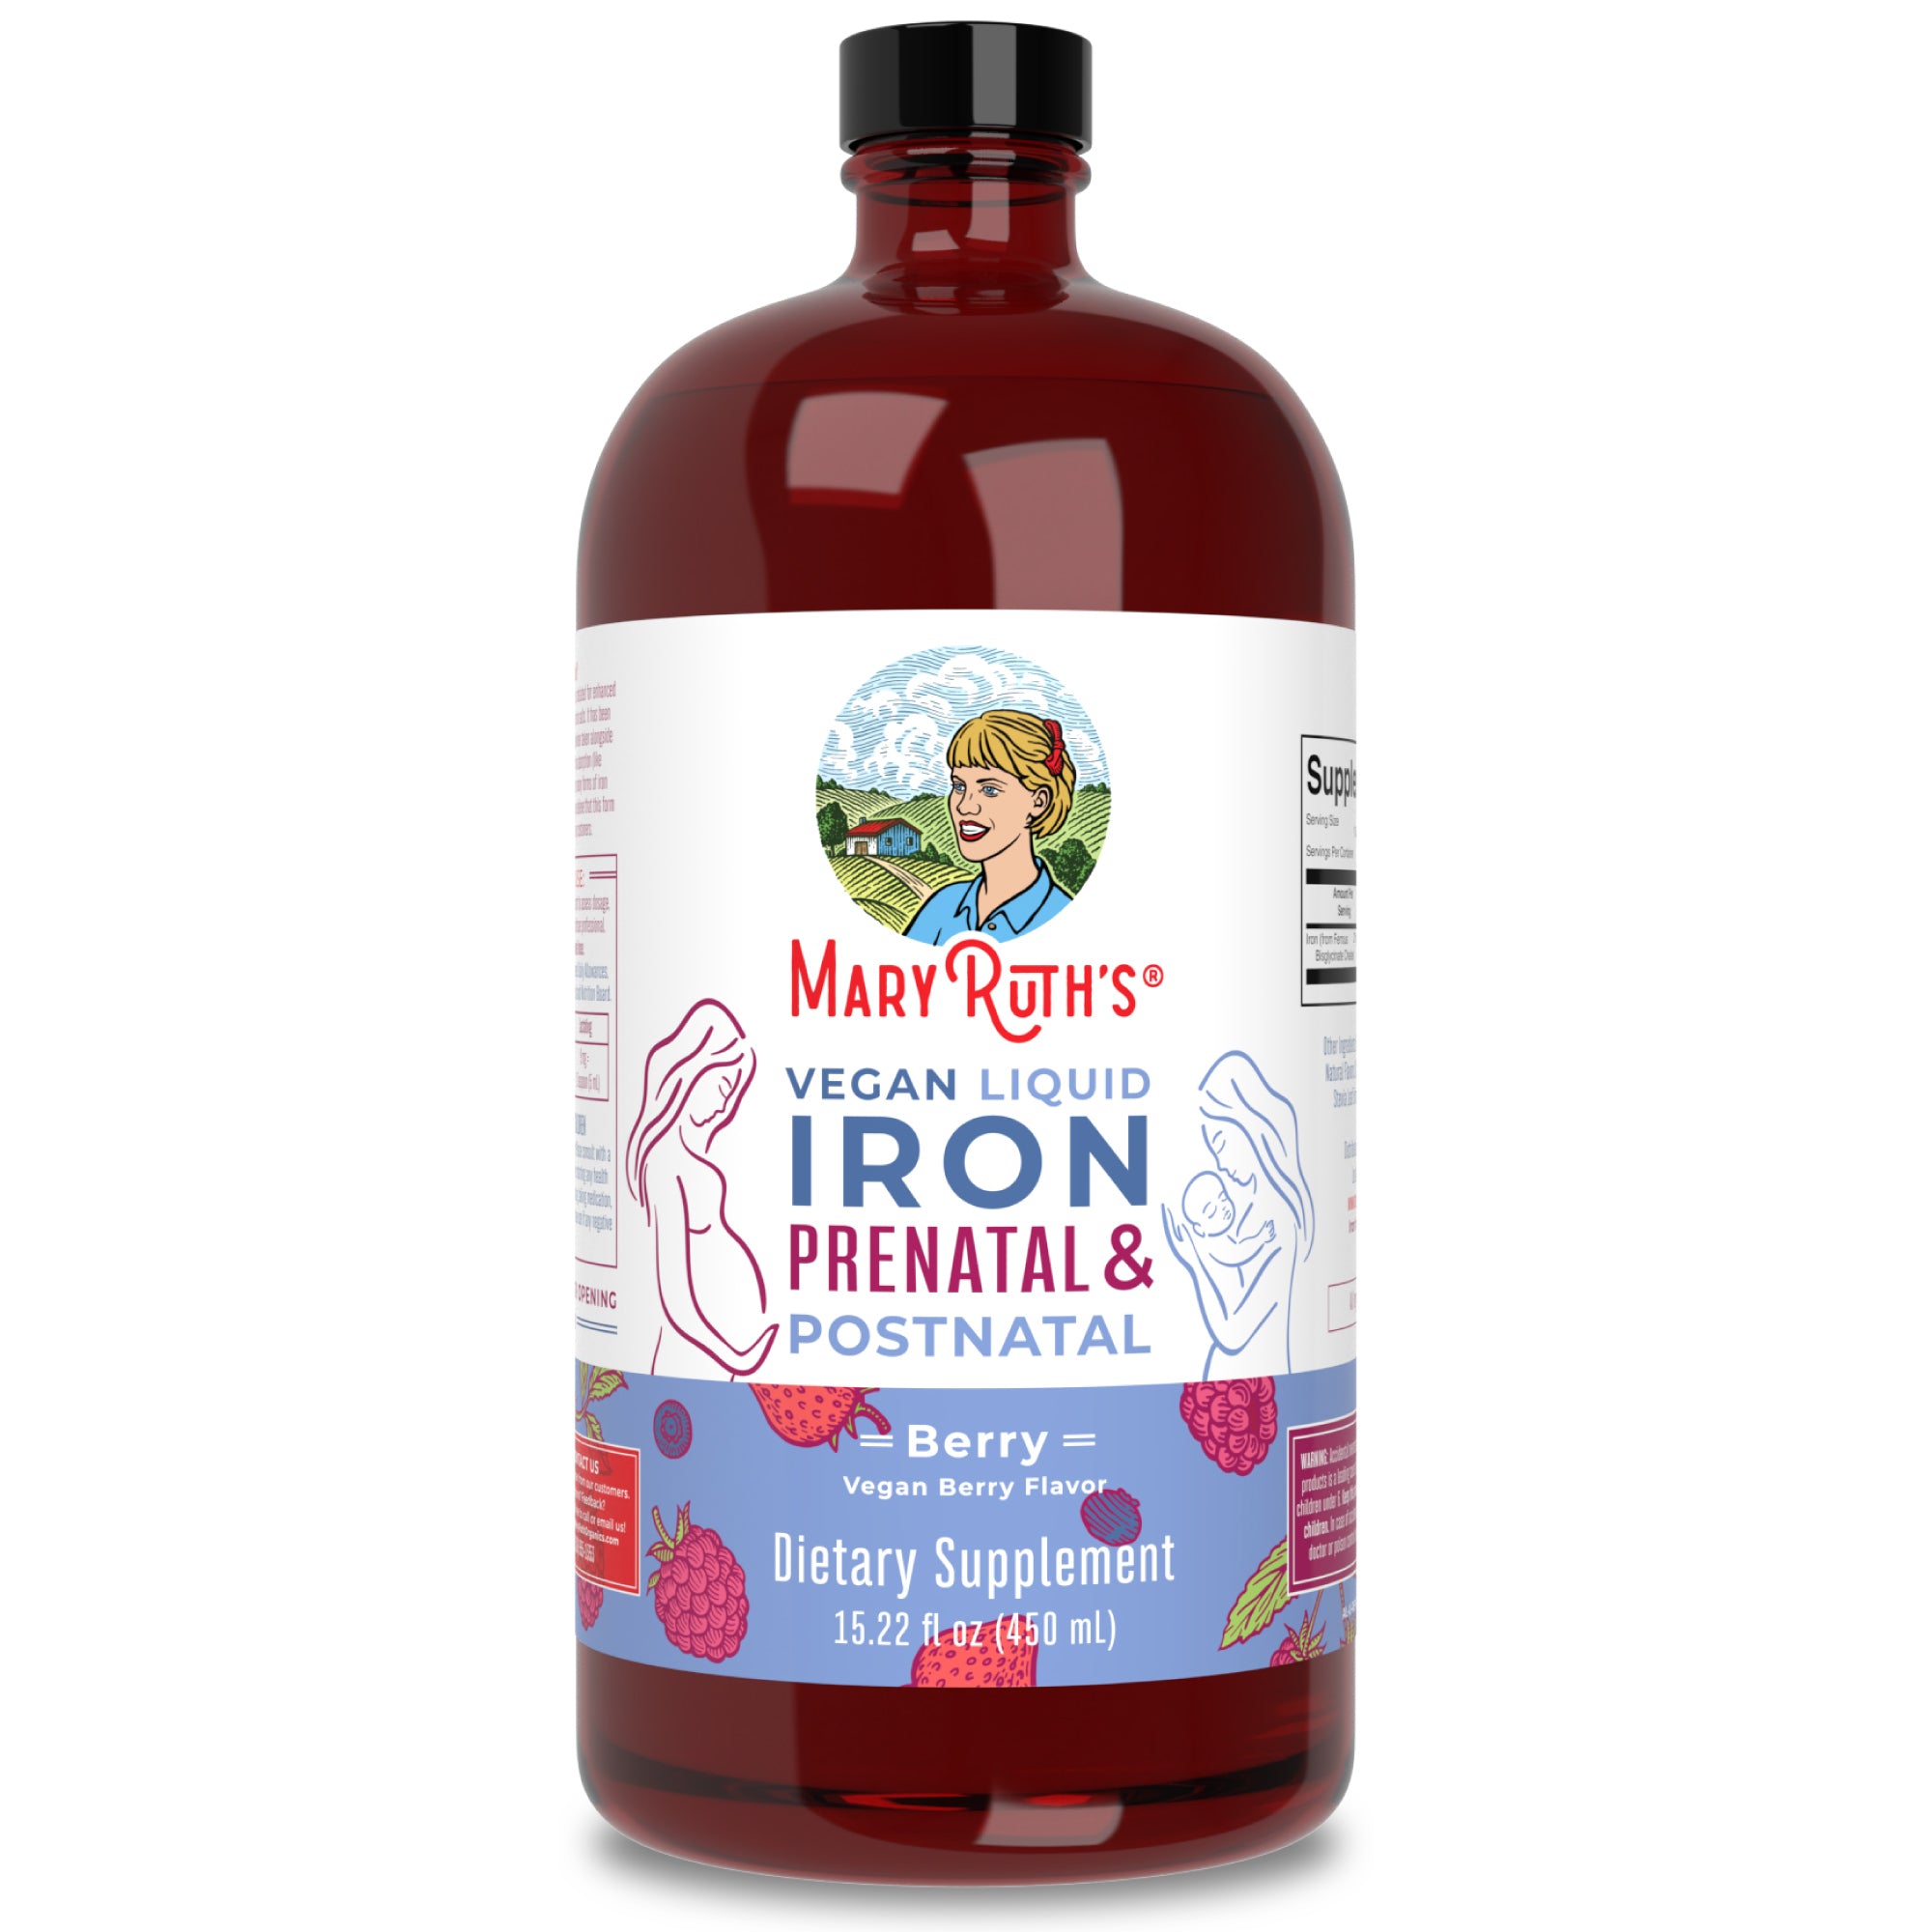 MaryRuth Prenatal & Postnatal Liquid Iron Supplement For Pregnancy Berry Flavor Product Image